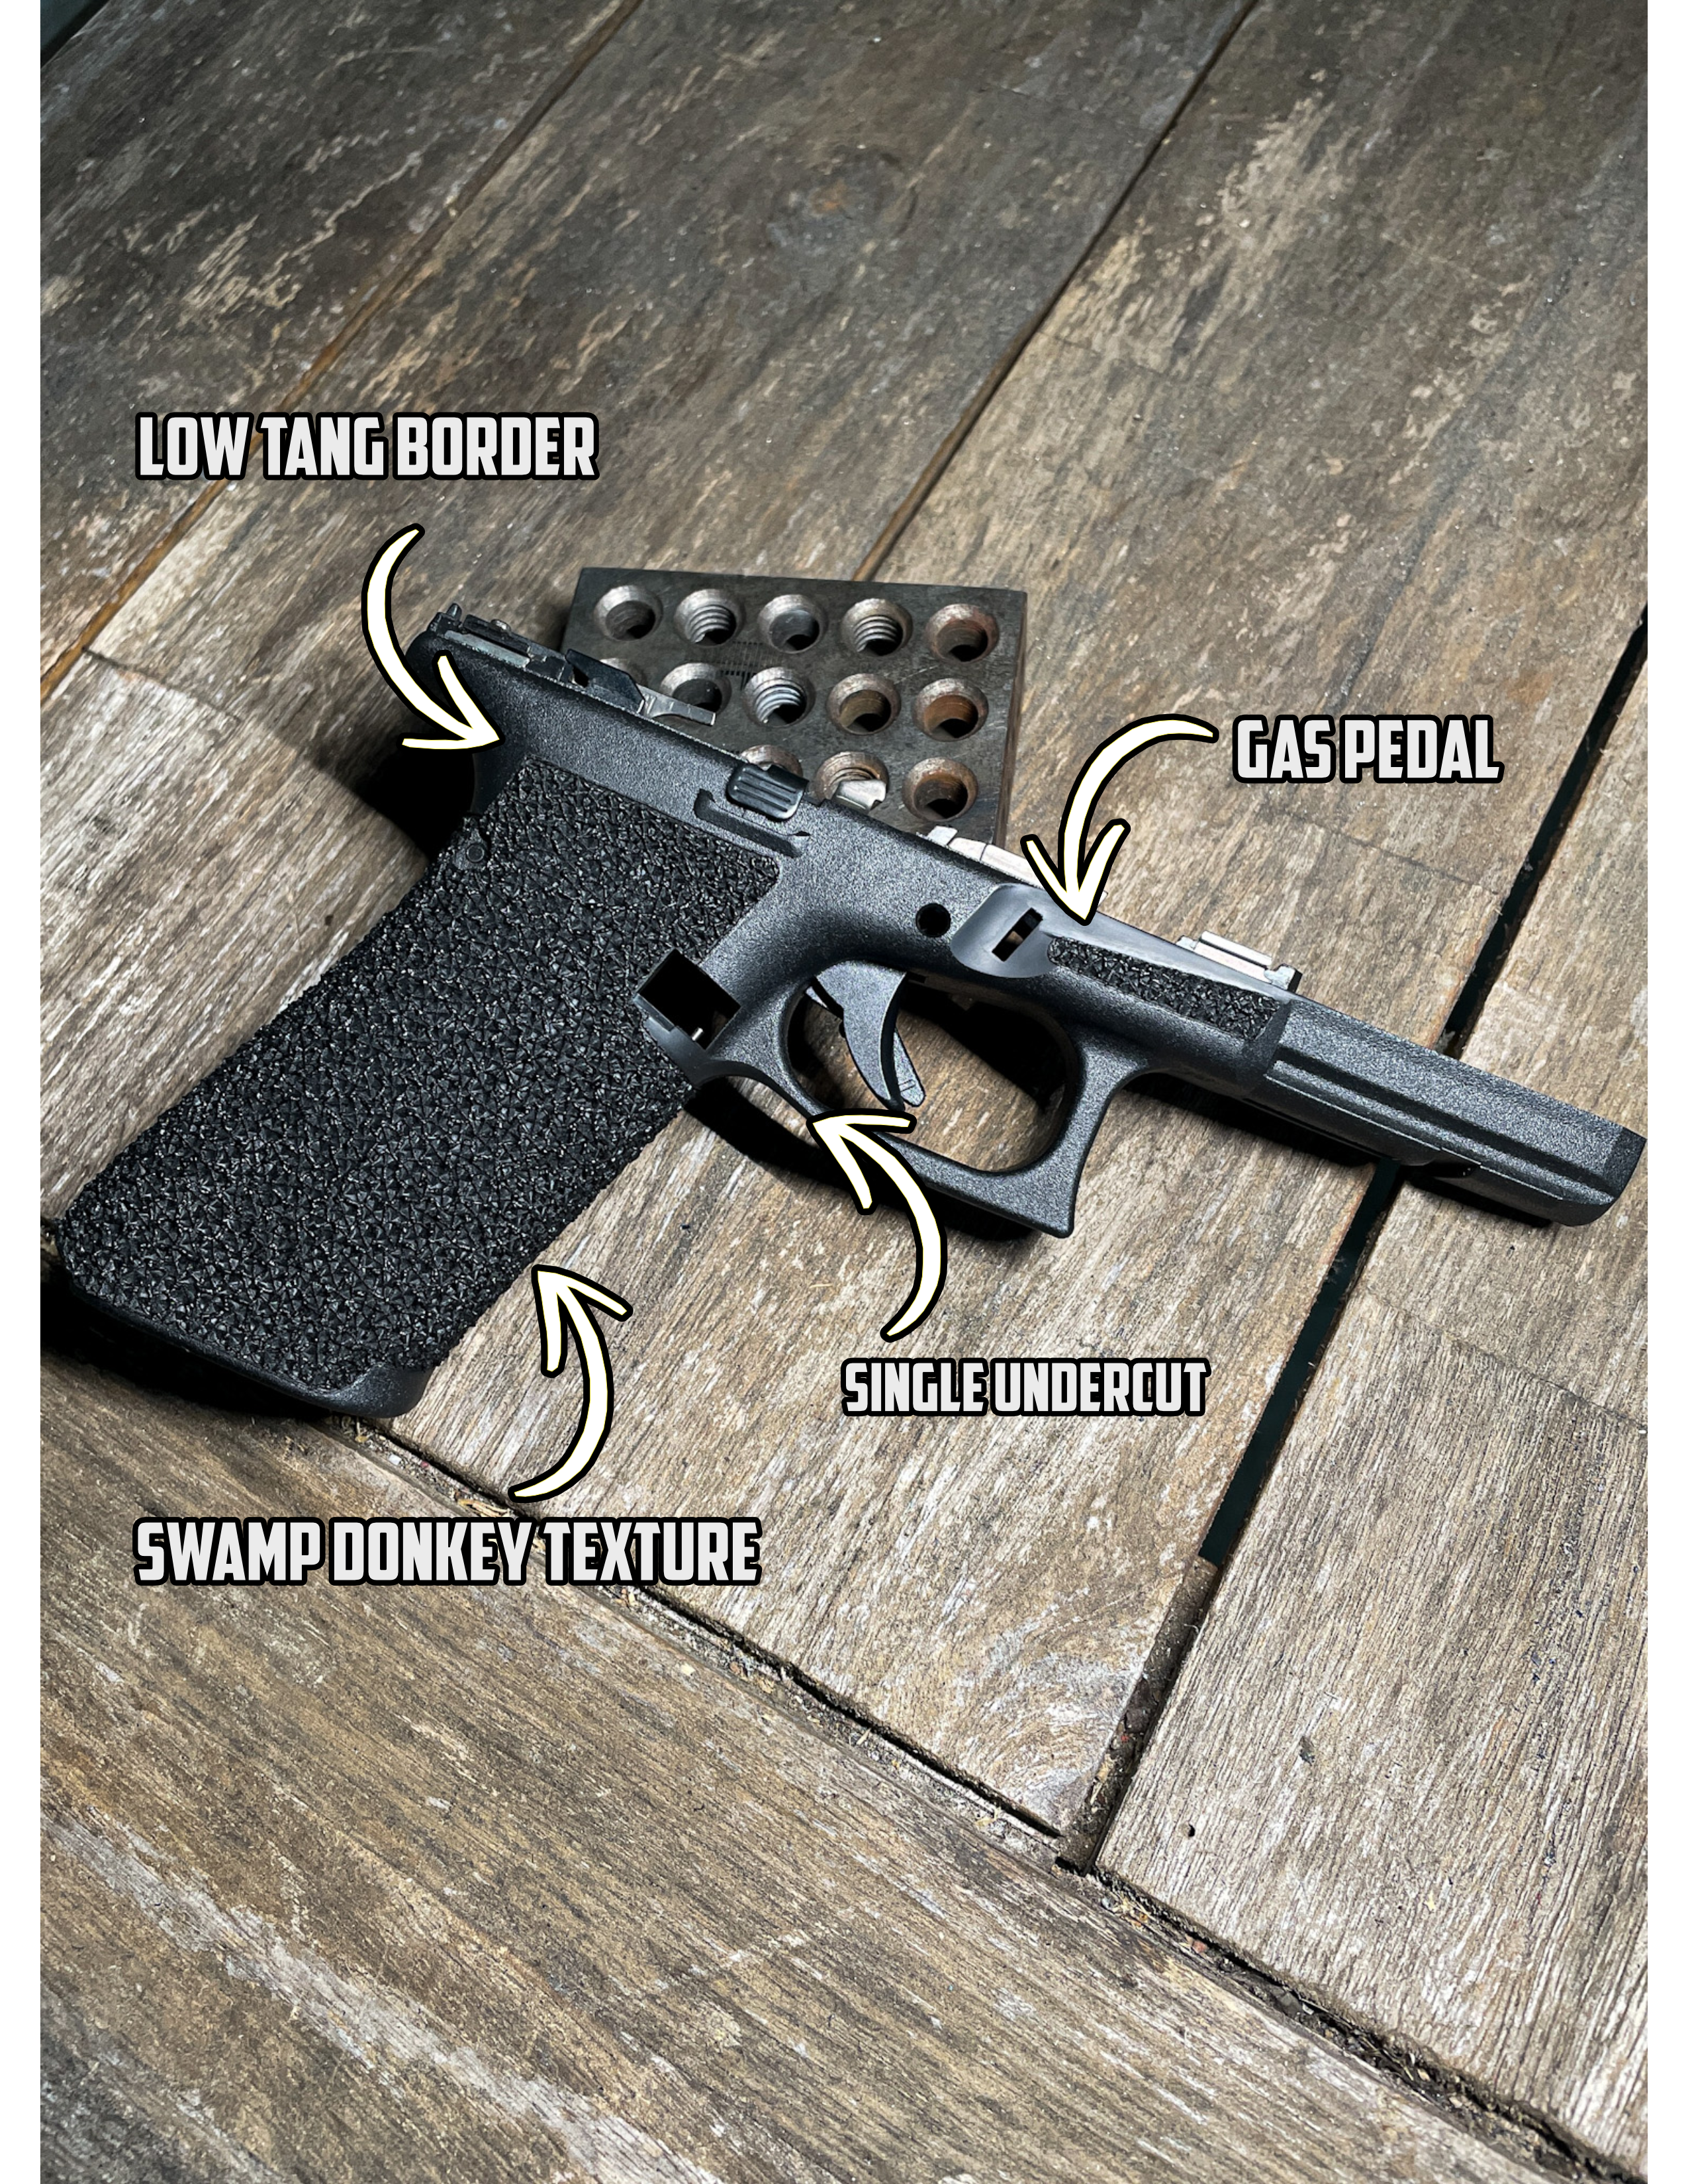 OT Defense Stipple kit -The Firearm Blog